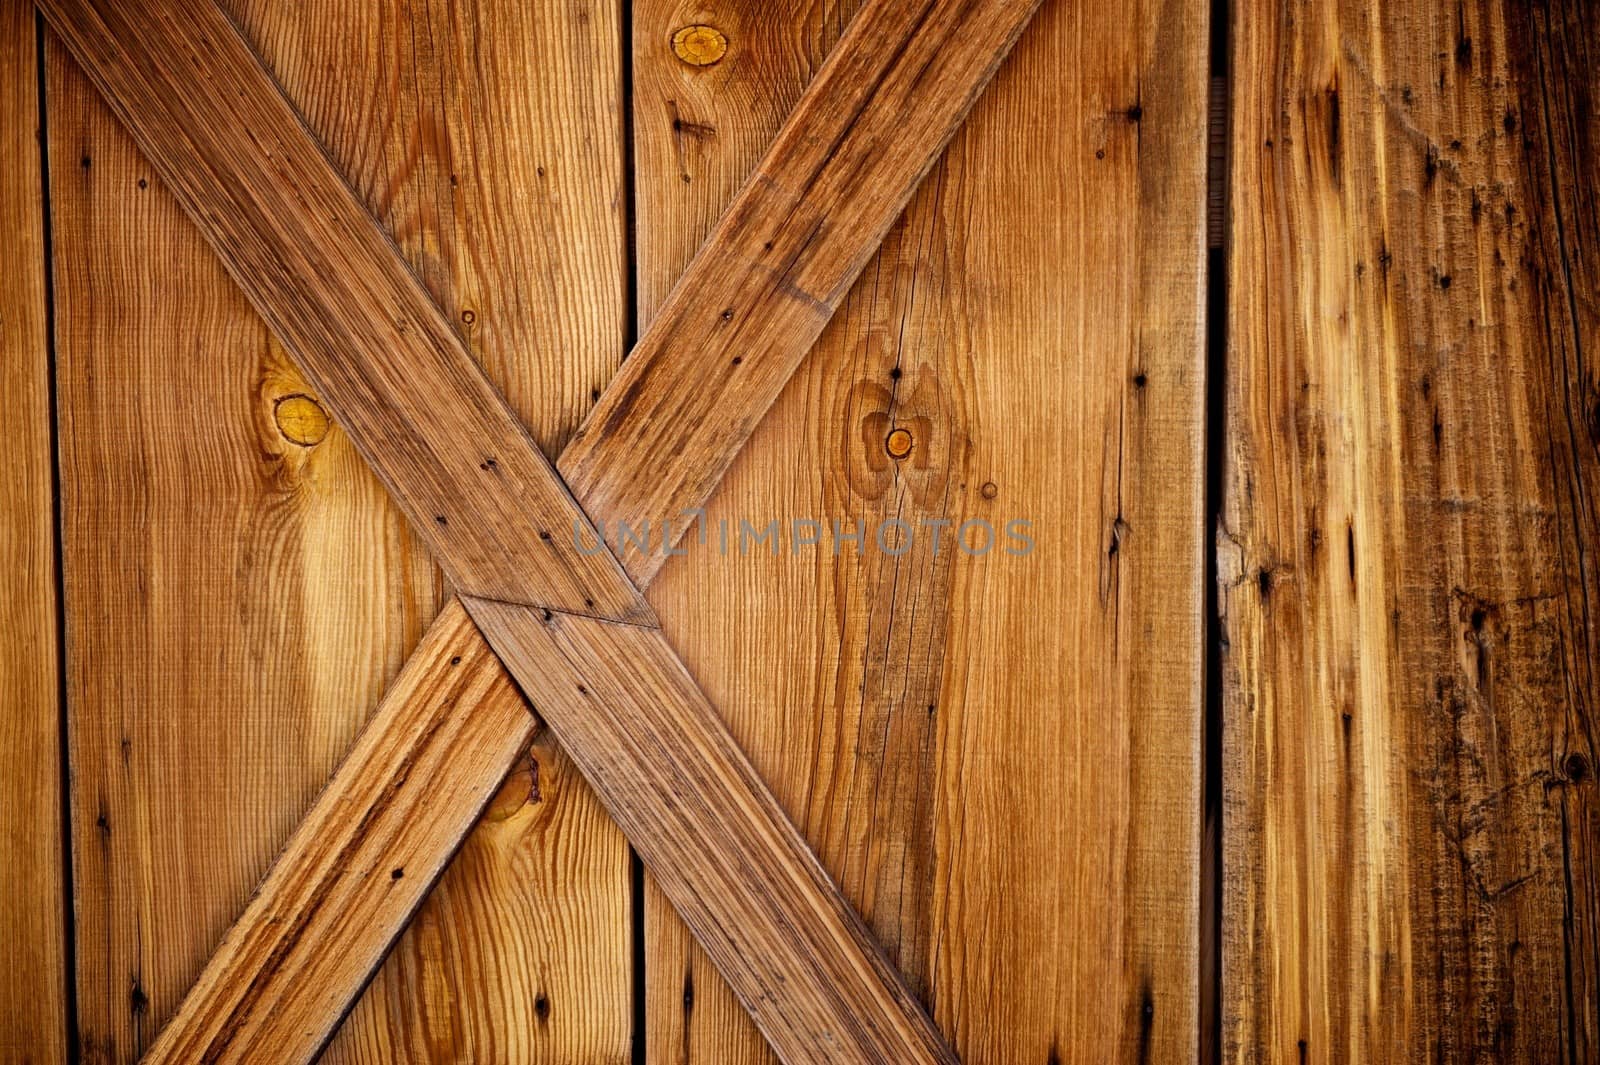 Barn Door Detail with Wood Grain by pixelsnap